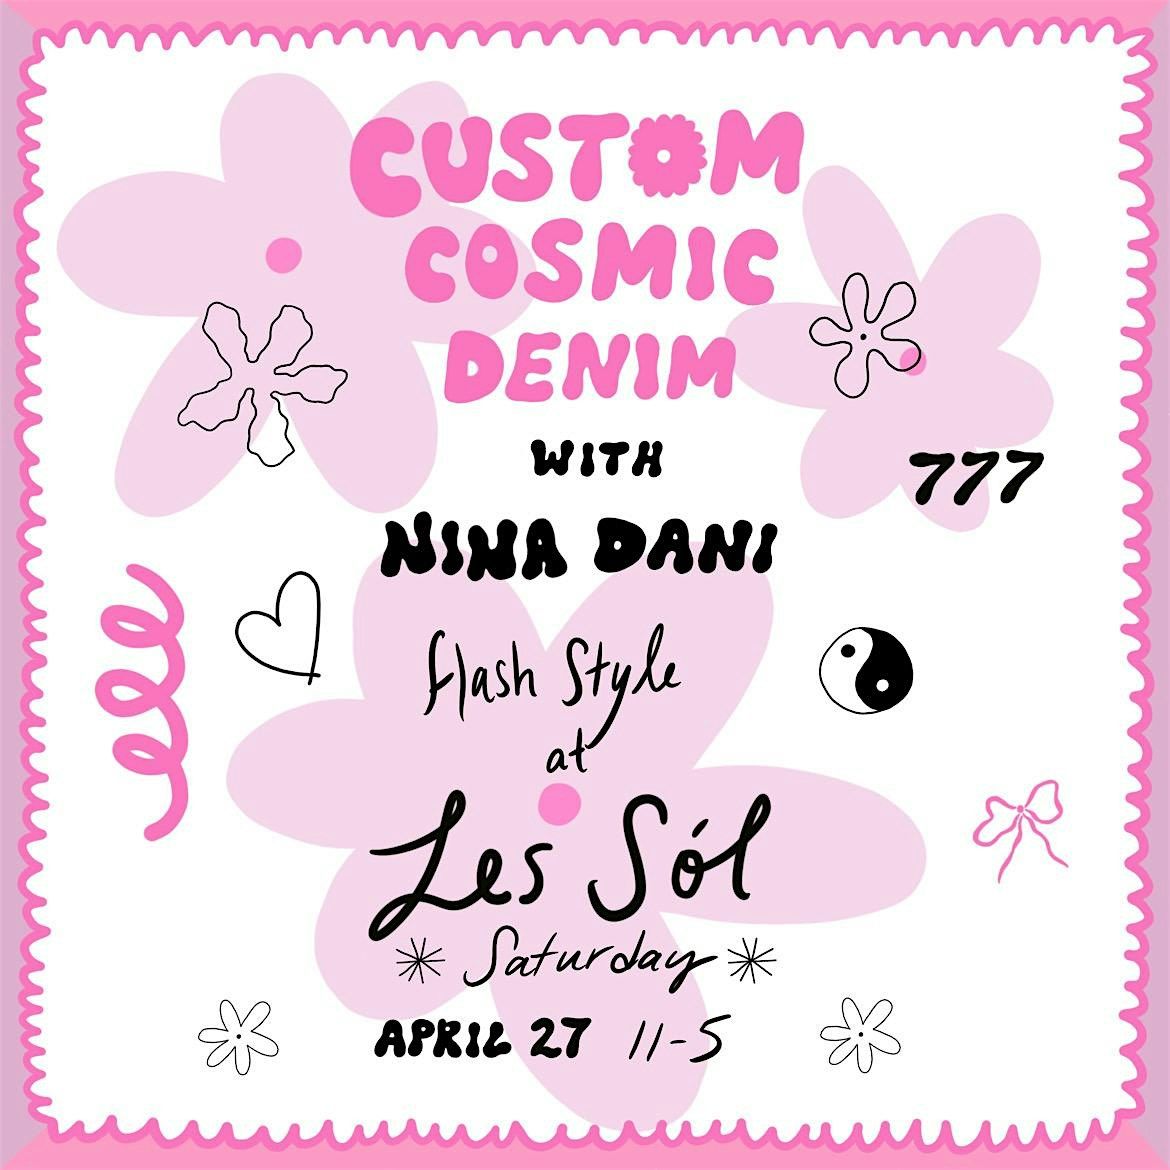 Custom Cosmic Denim With Nina Dani